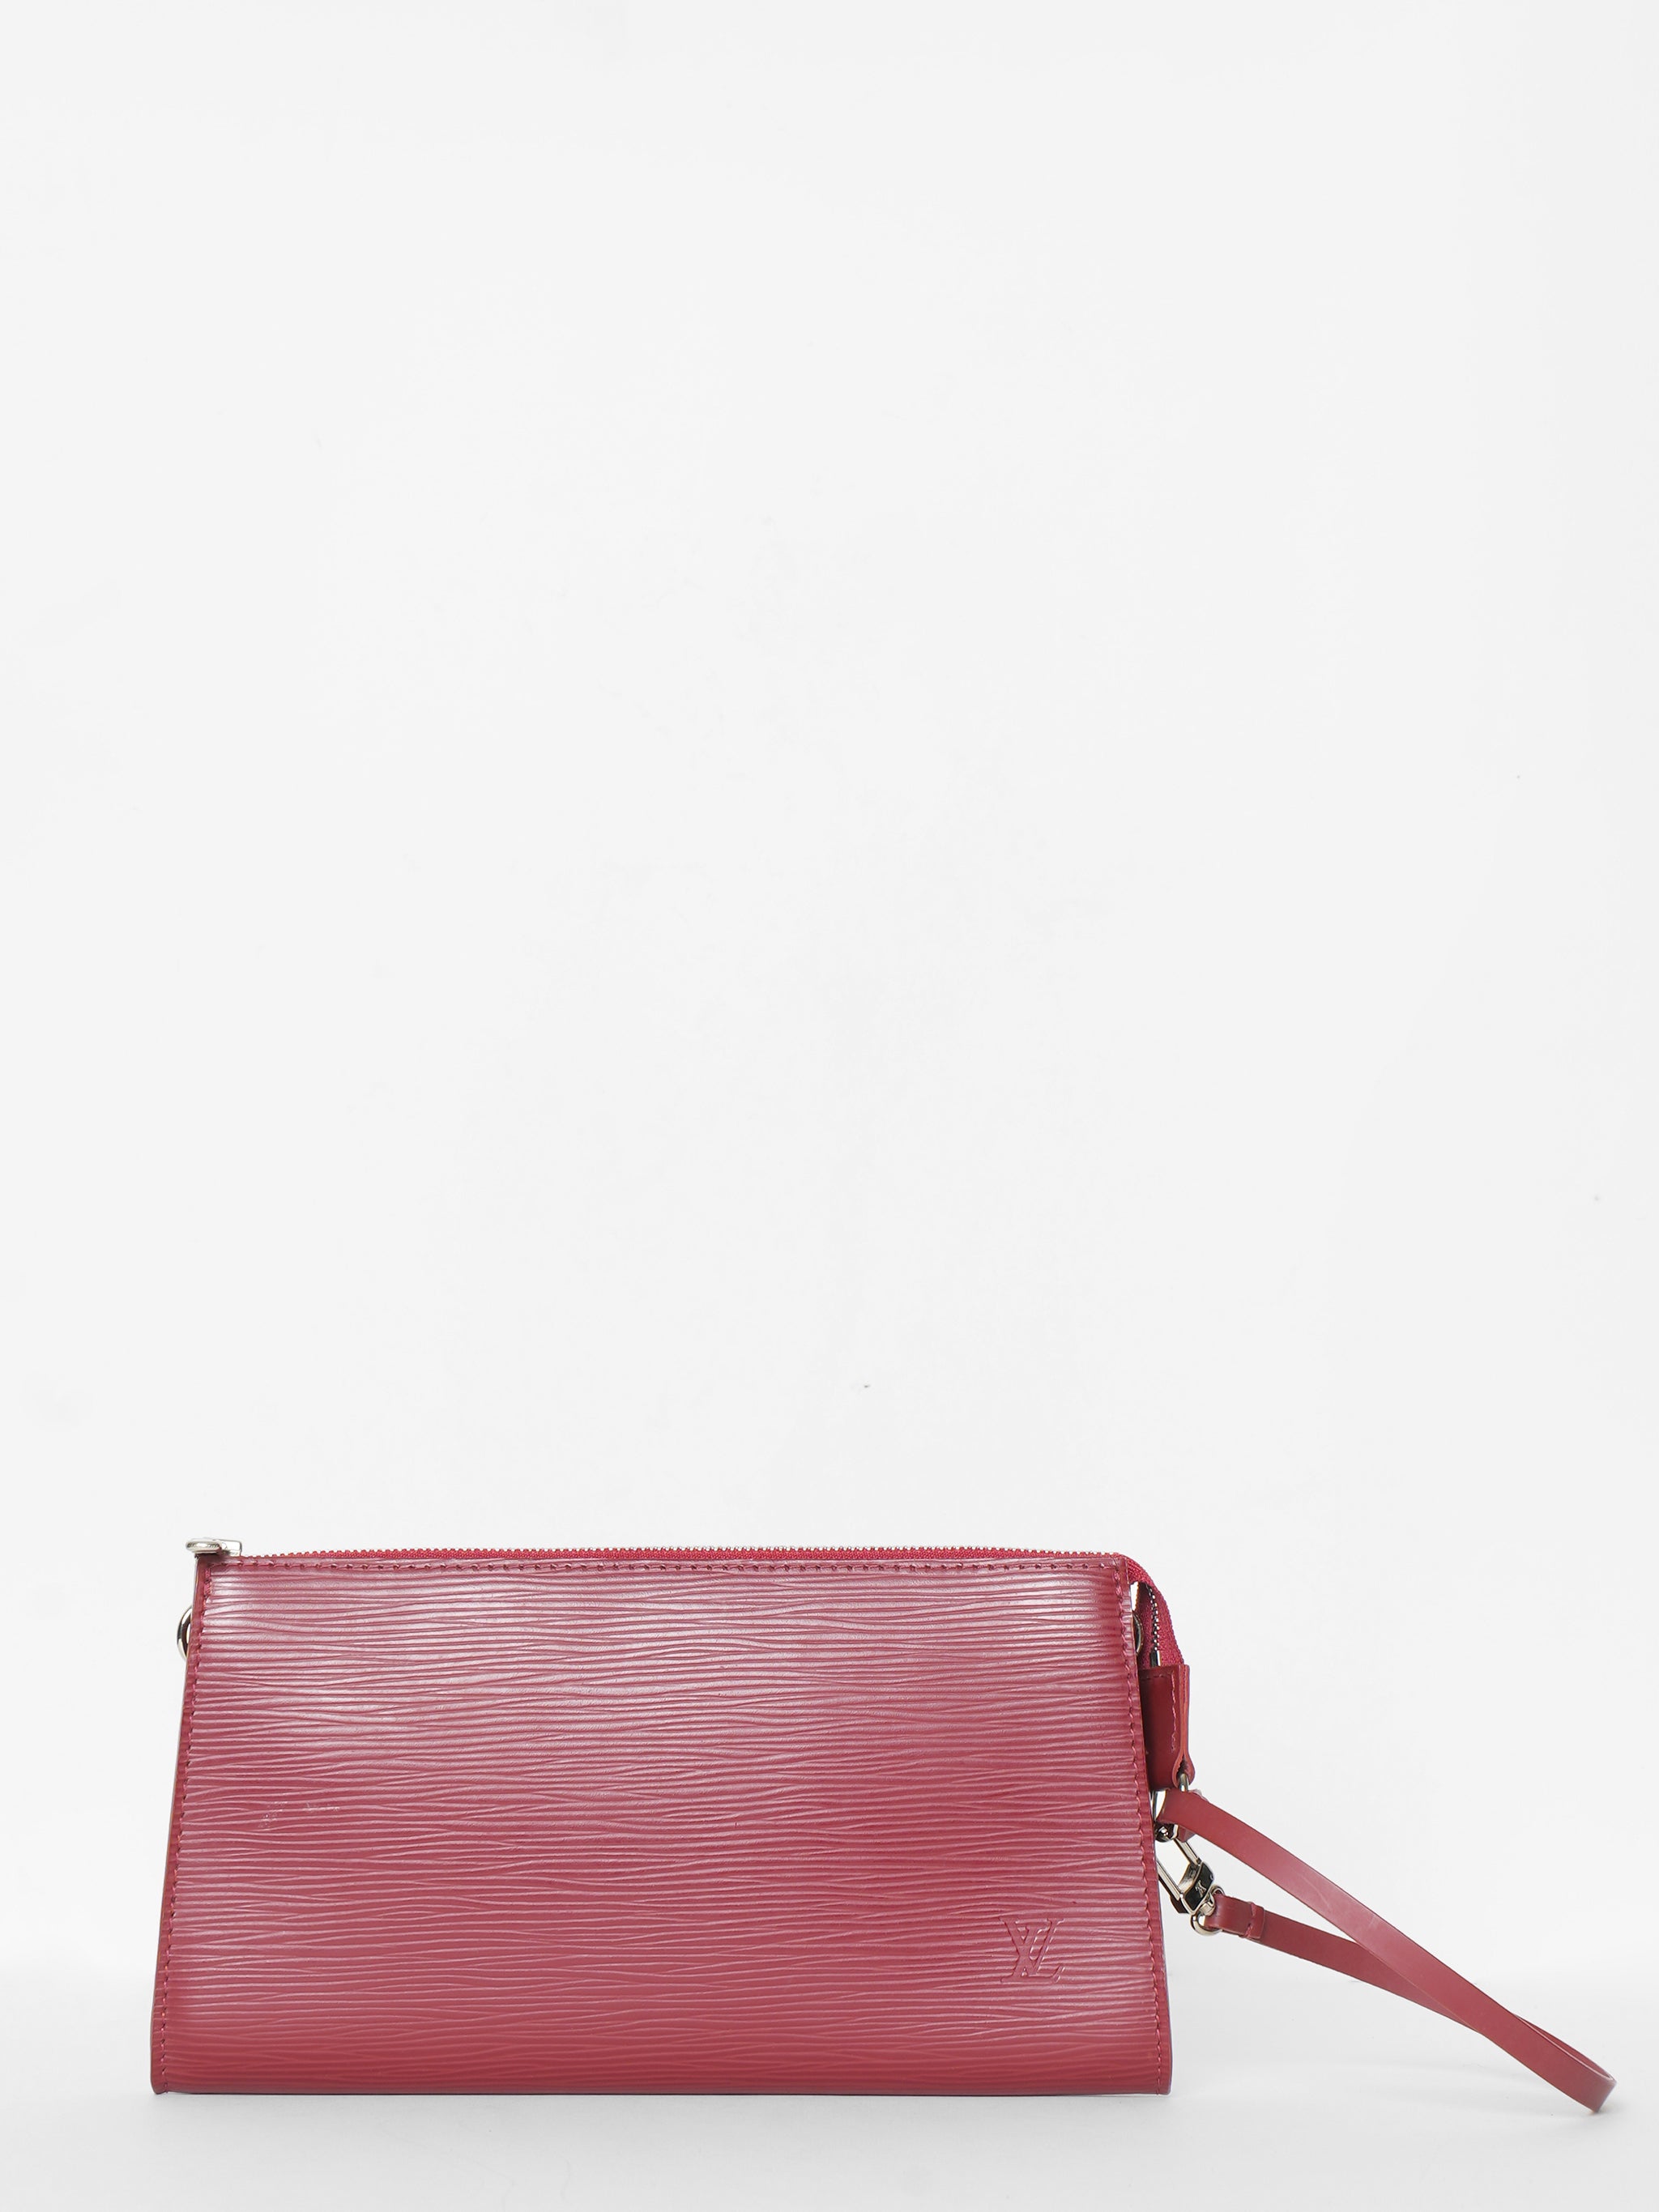 Louis Vuitton, Bags, Louis Viton Red Bag